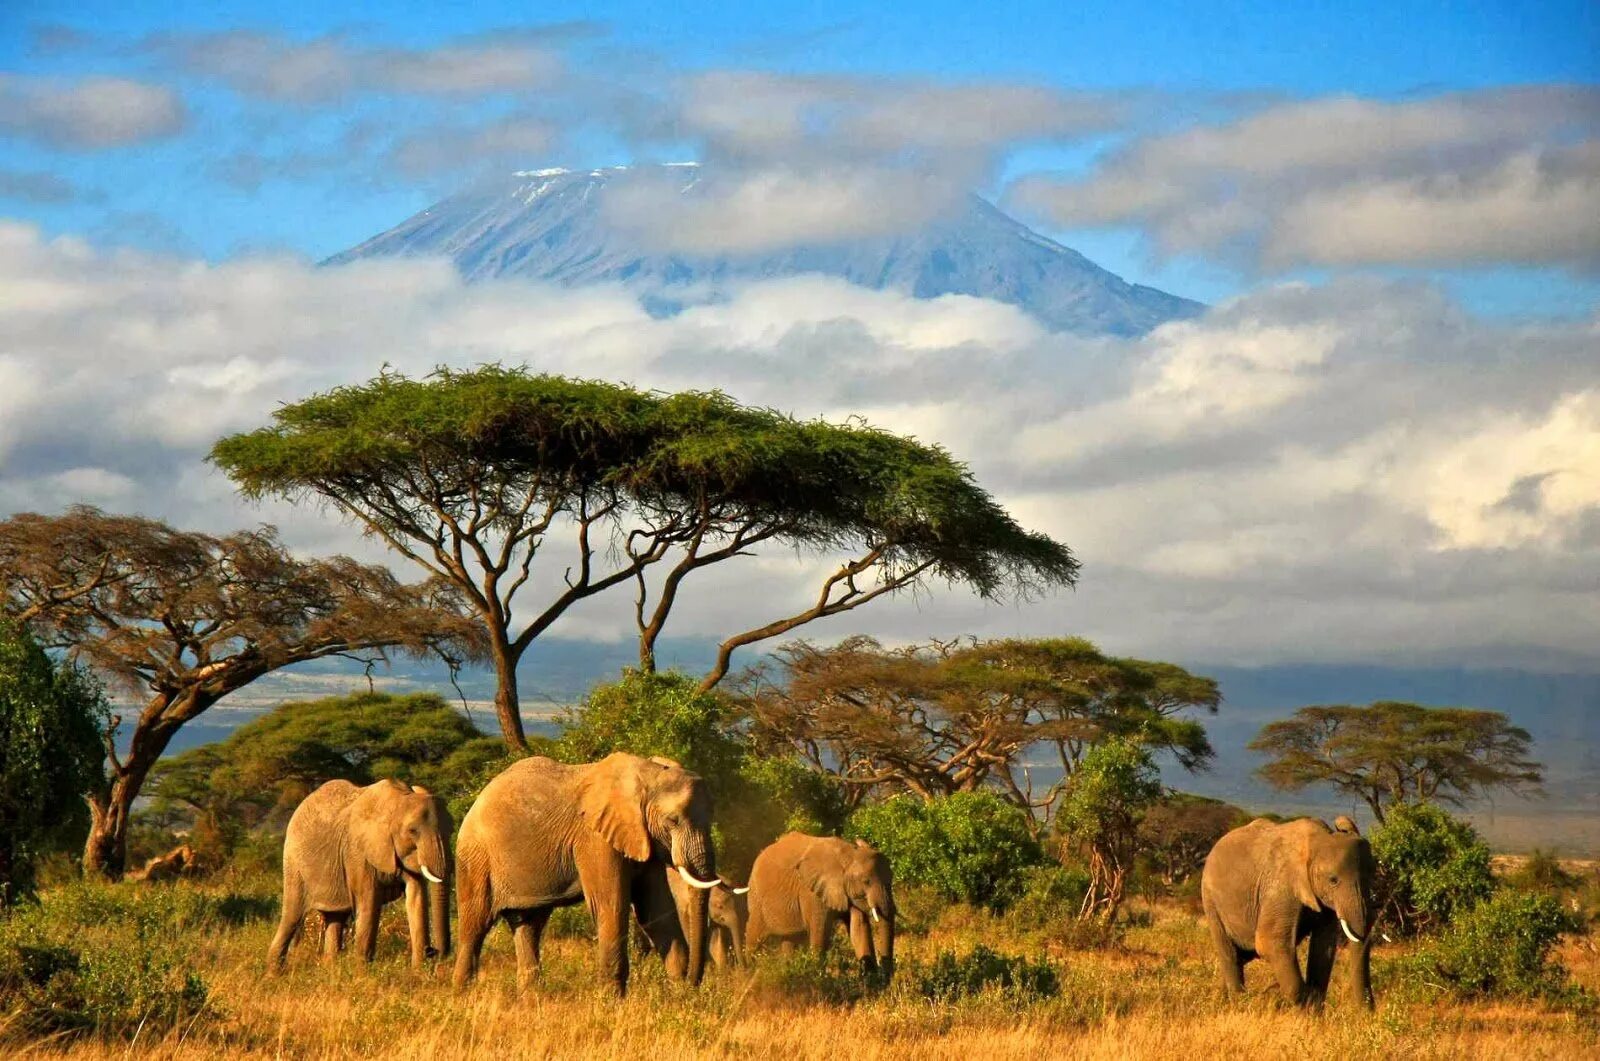 Красивая страна африки. Танзания сафари Килиманджаро. Национальный парк Килиманджаро в Африке. Национальный парк Килиманджаро в Танзании. Саванна Килиманджаро.